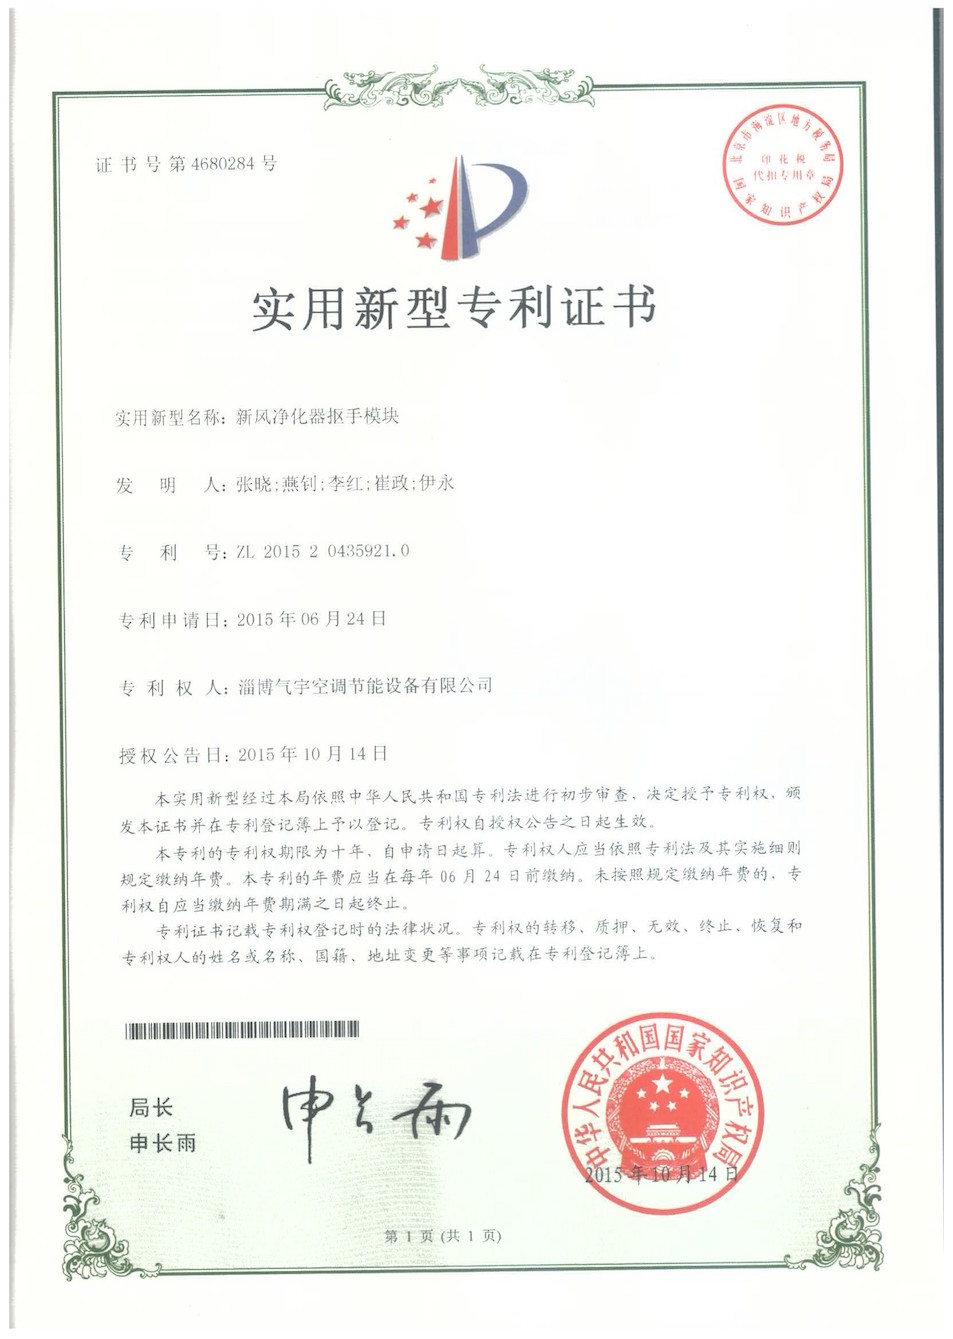 Practical patent certificate